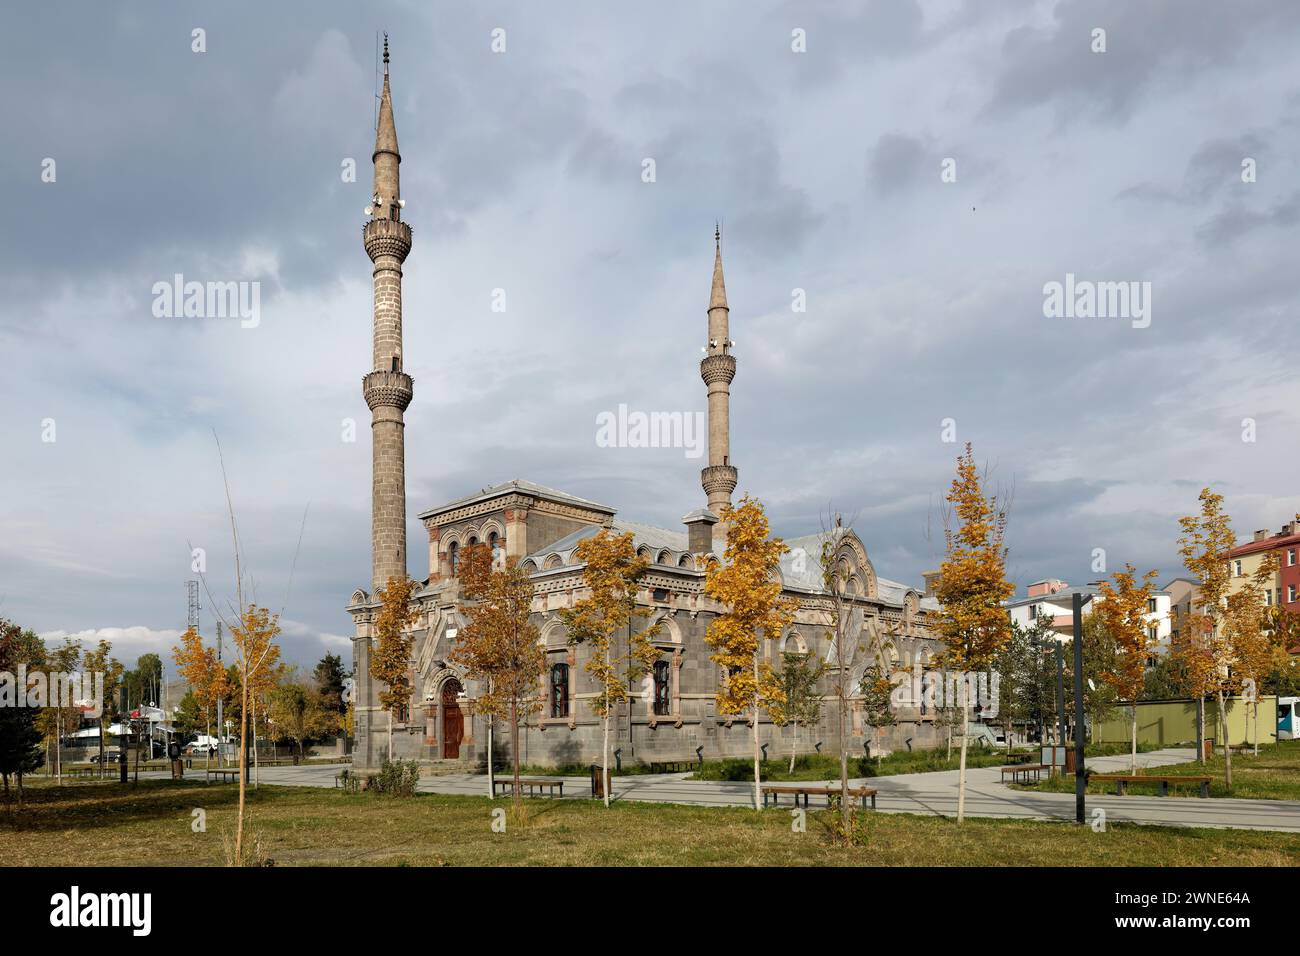 Mosquée Fethiye, ancienne église orthodoxe russe, Kars, Turquie Banque D'Images